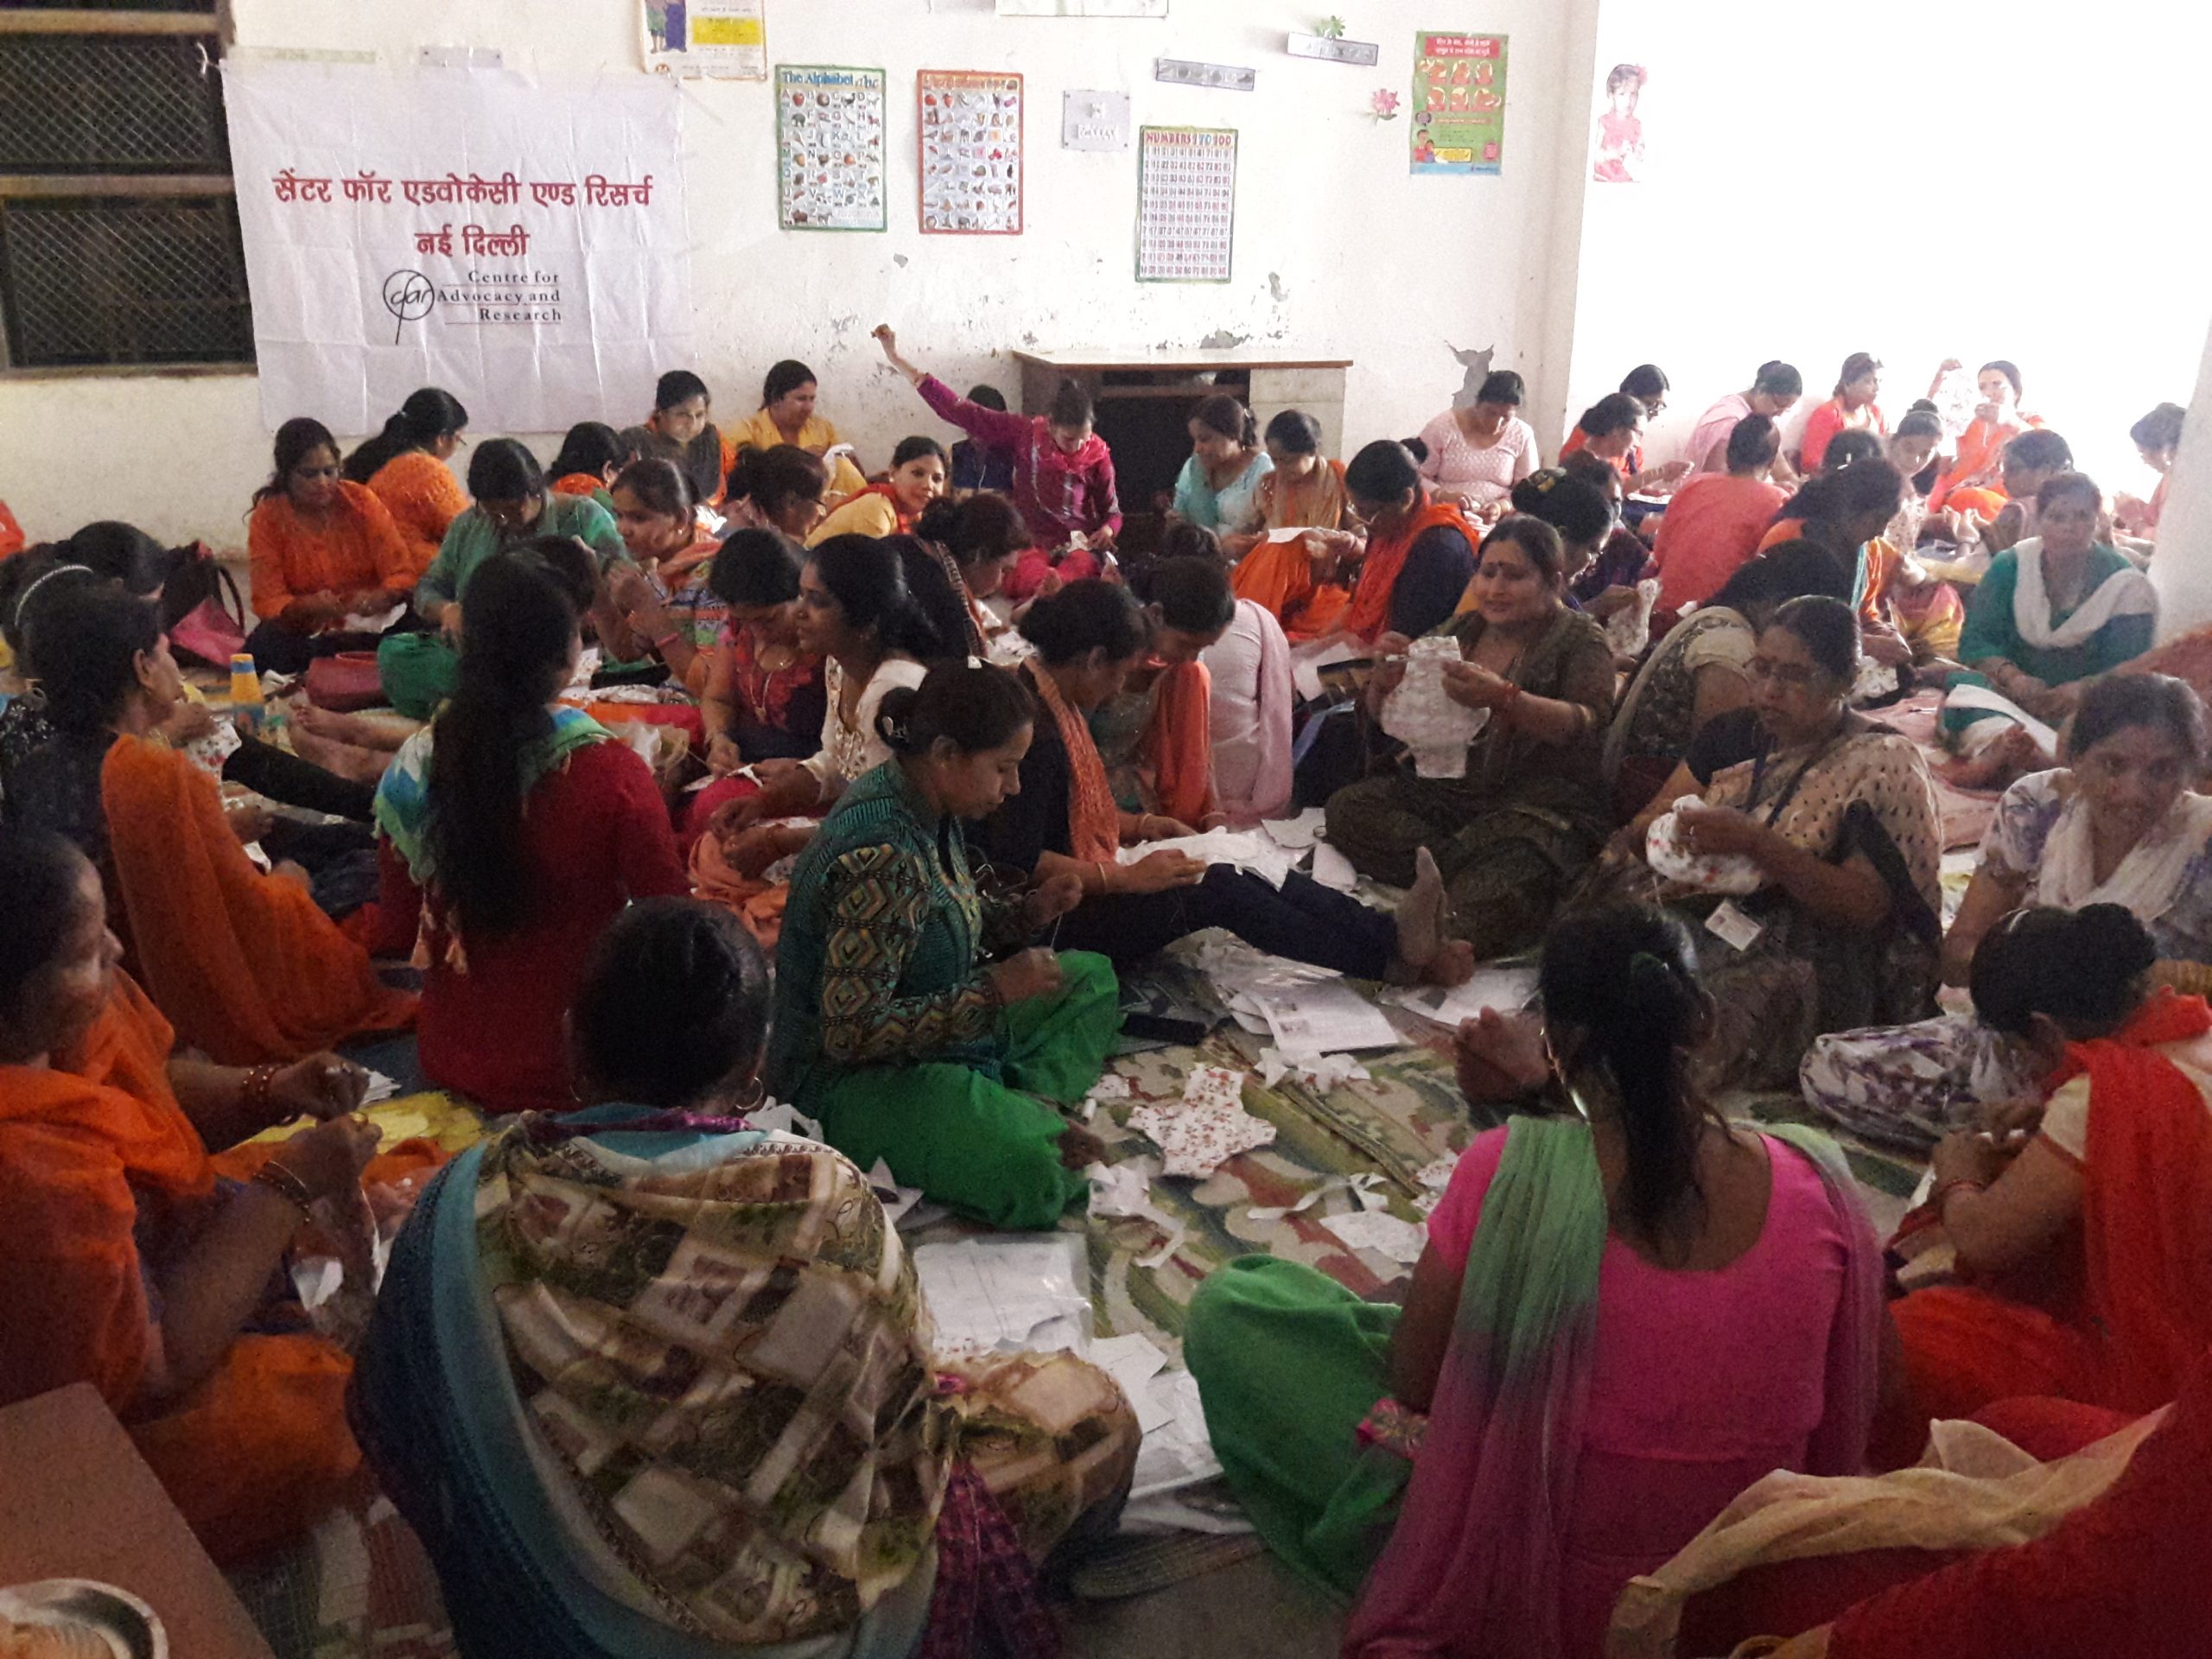 Menstrual Hygiene Management: The Delhi Story